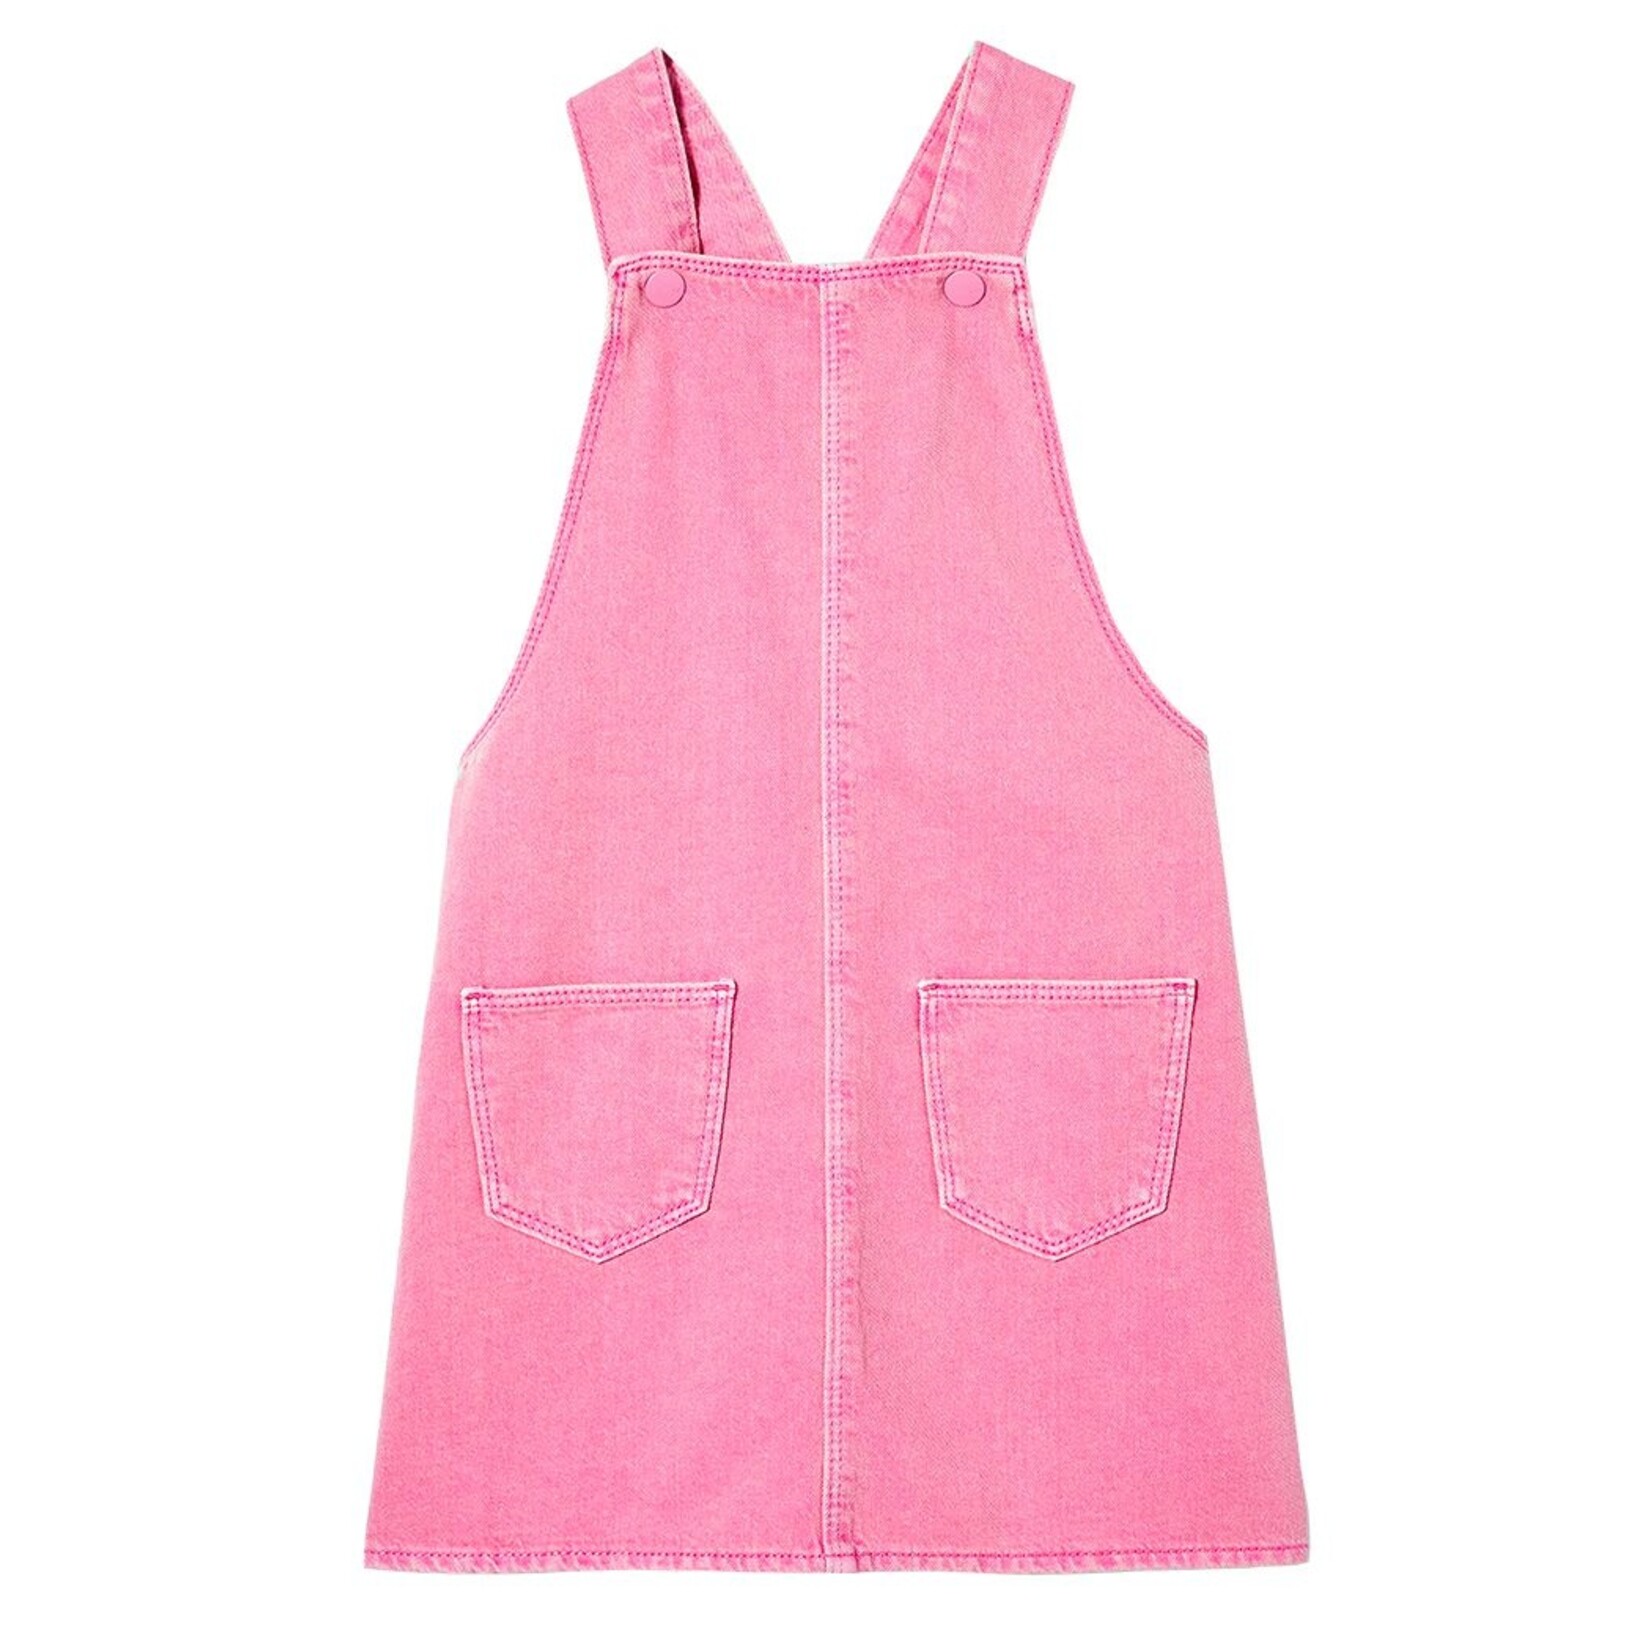 Osh Kosh Denim PINK Tulle Skirt Overalls Dress Baby Girl Size 12 Months |  eBay